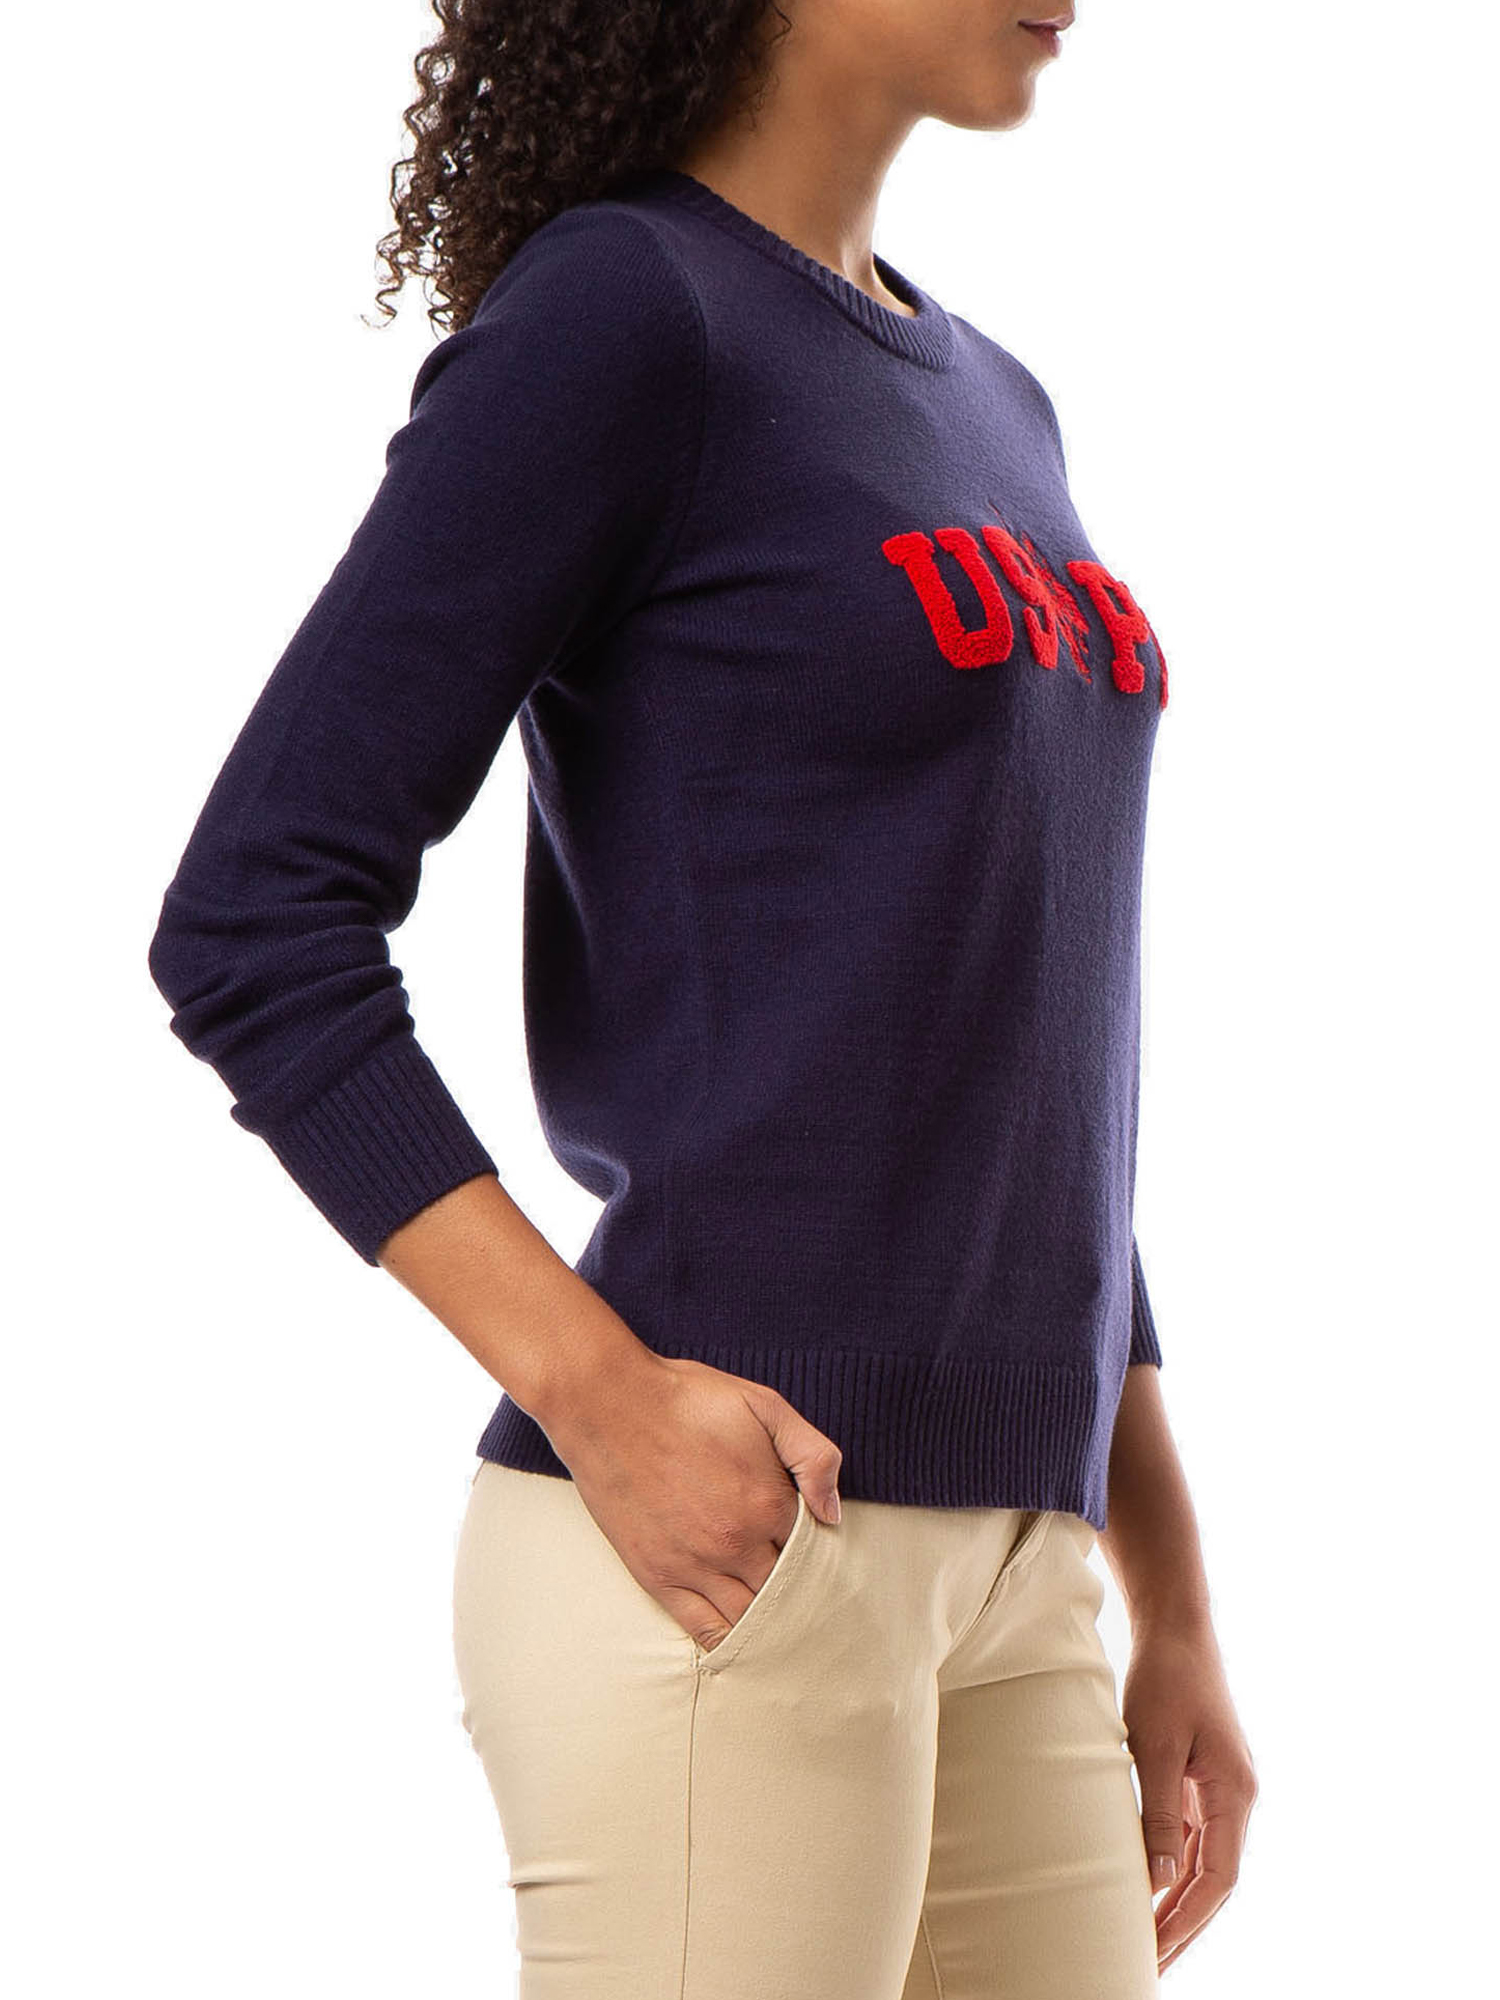 U.S. Polo Assn. Women’s Logo Crewneck Sweater - image 3 of 4